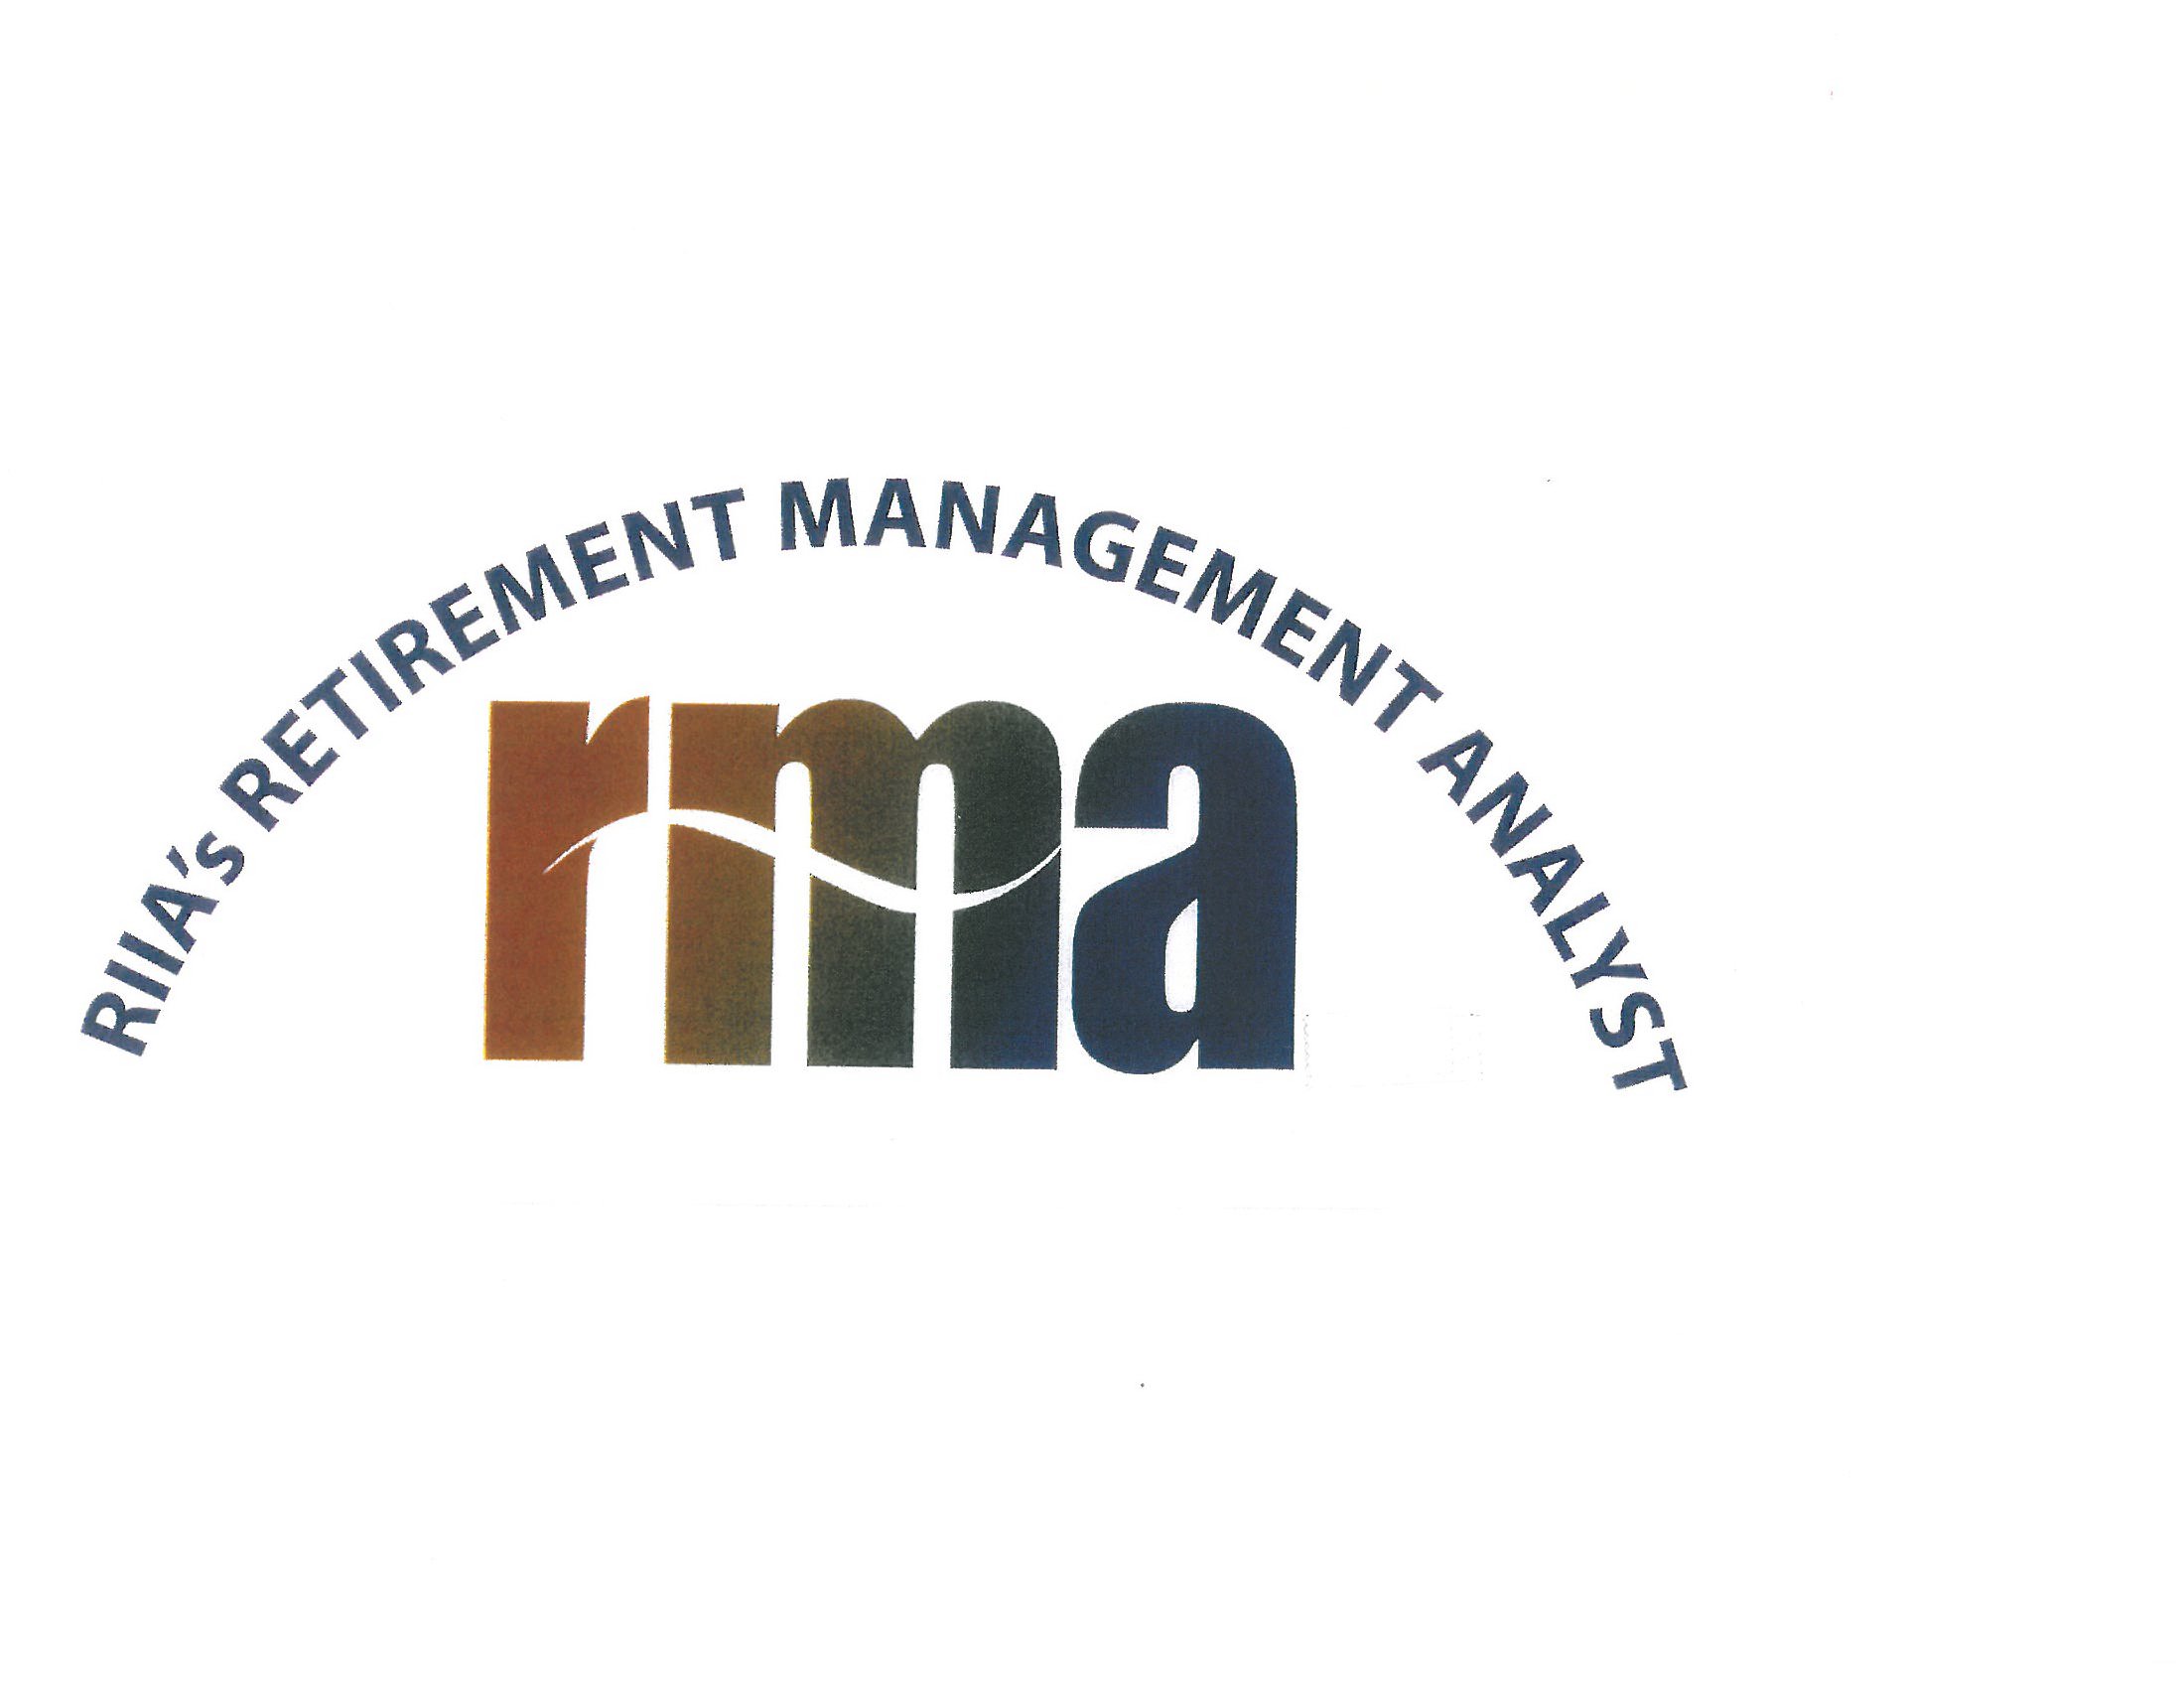  RIIA'S RETIREMENT MANAGEMENT ANALYST RMA